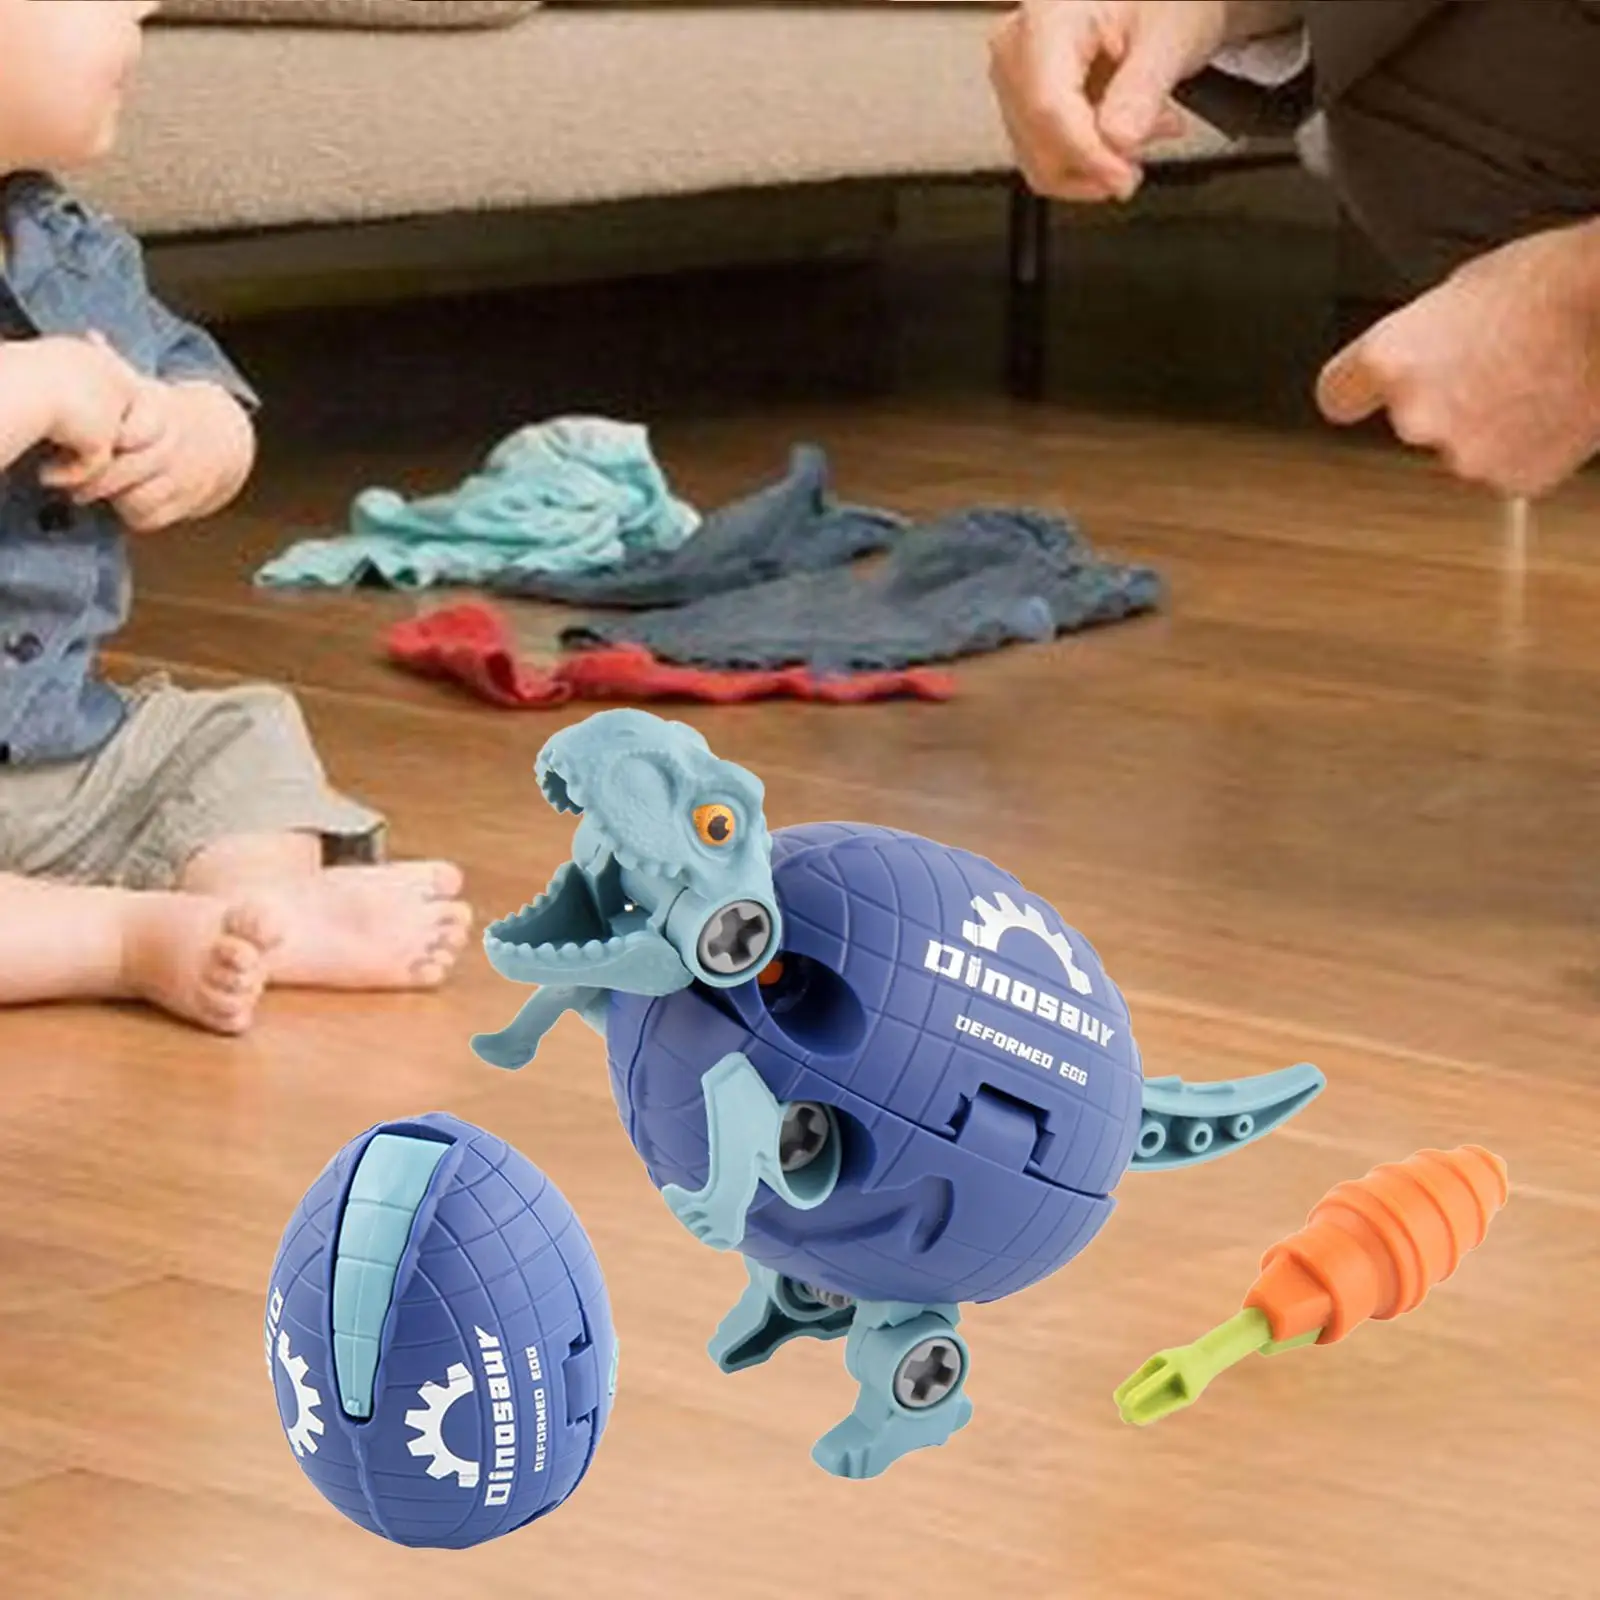 Dinosaur Assembly DIY Toy Dinosaur Egg Dinosaur Disassembly Toy for Birthday Boys